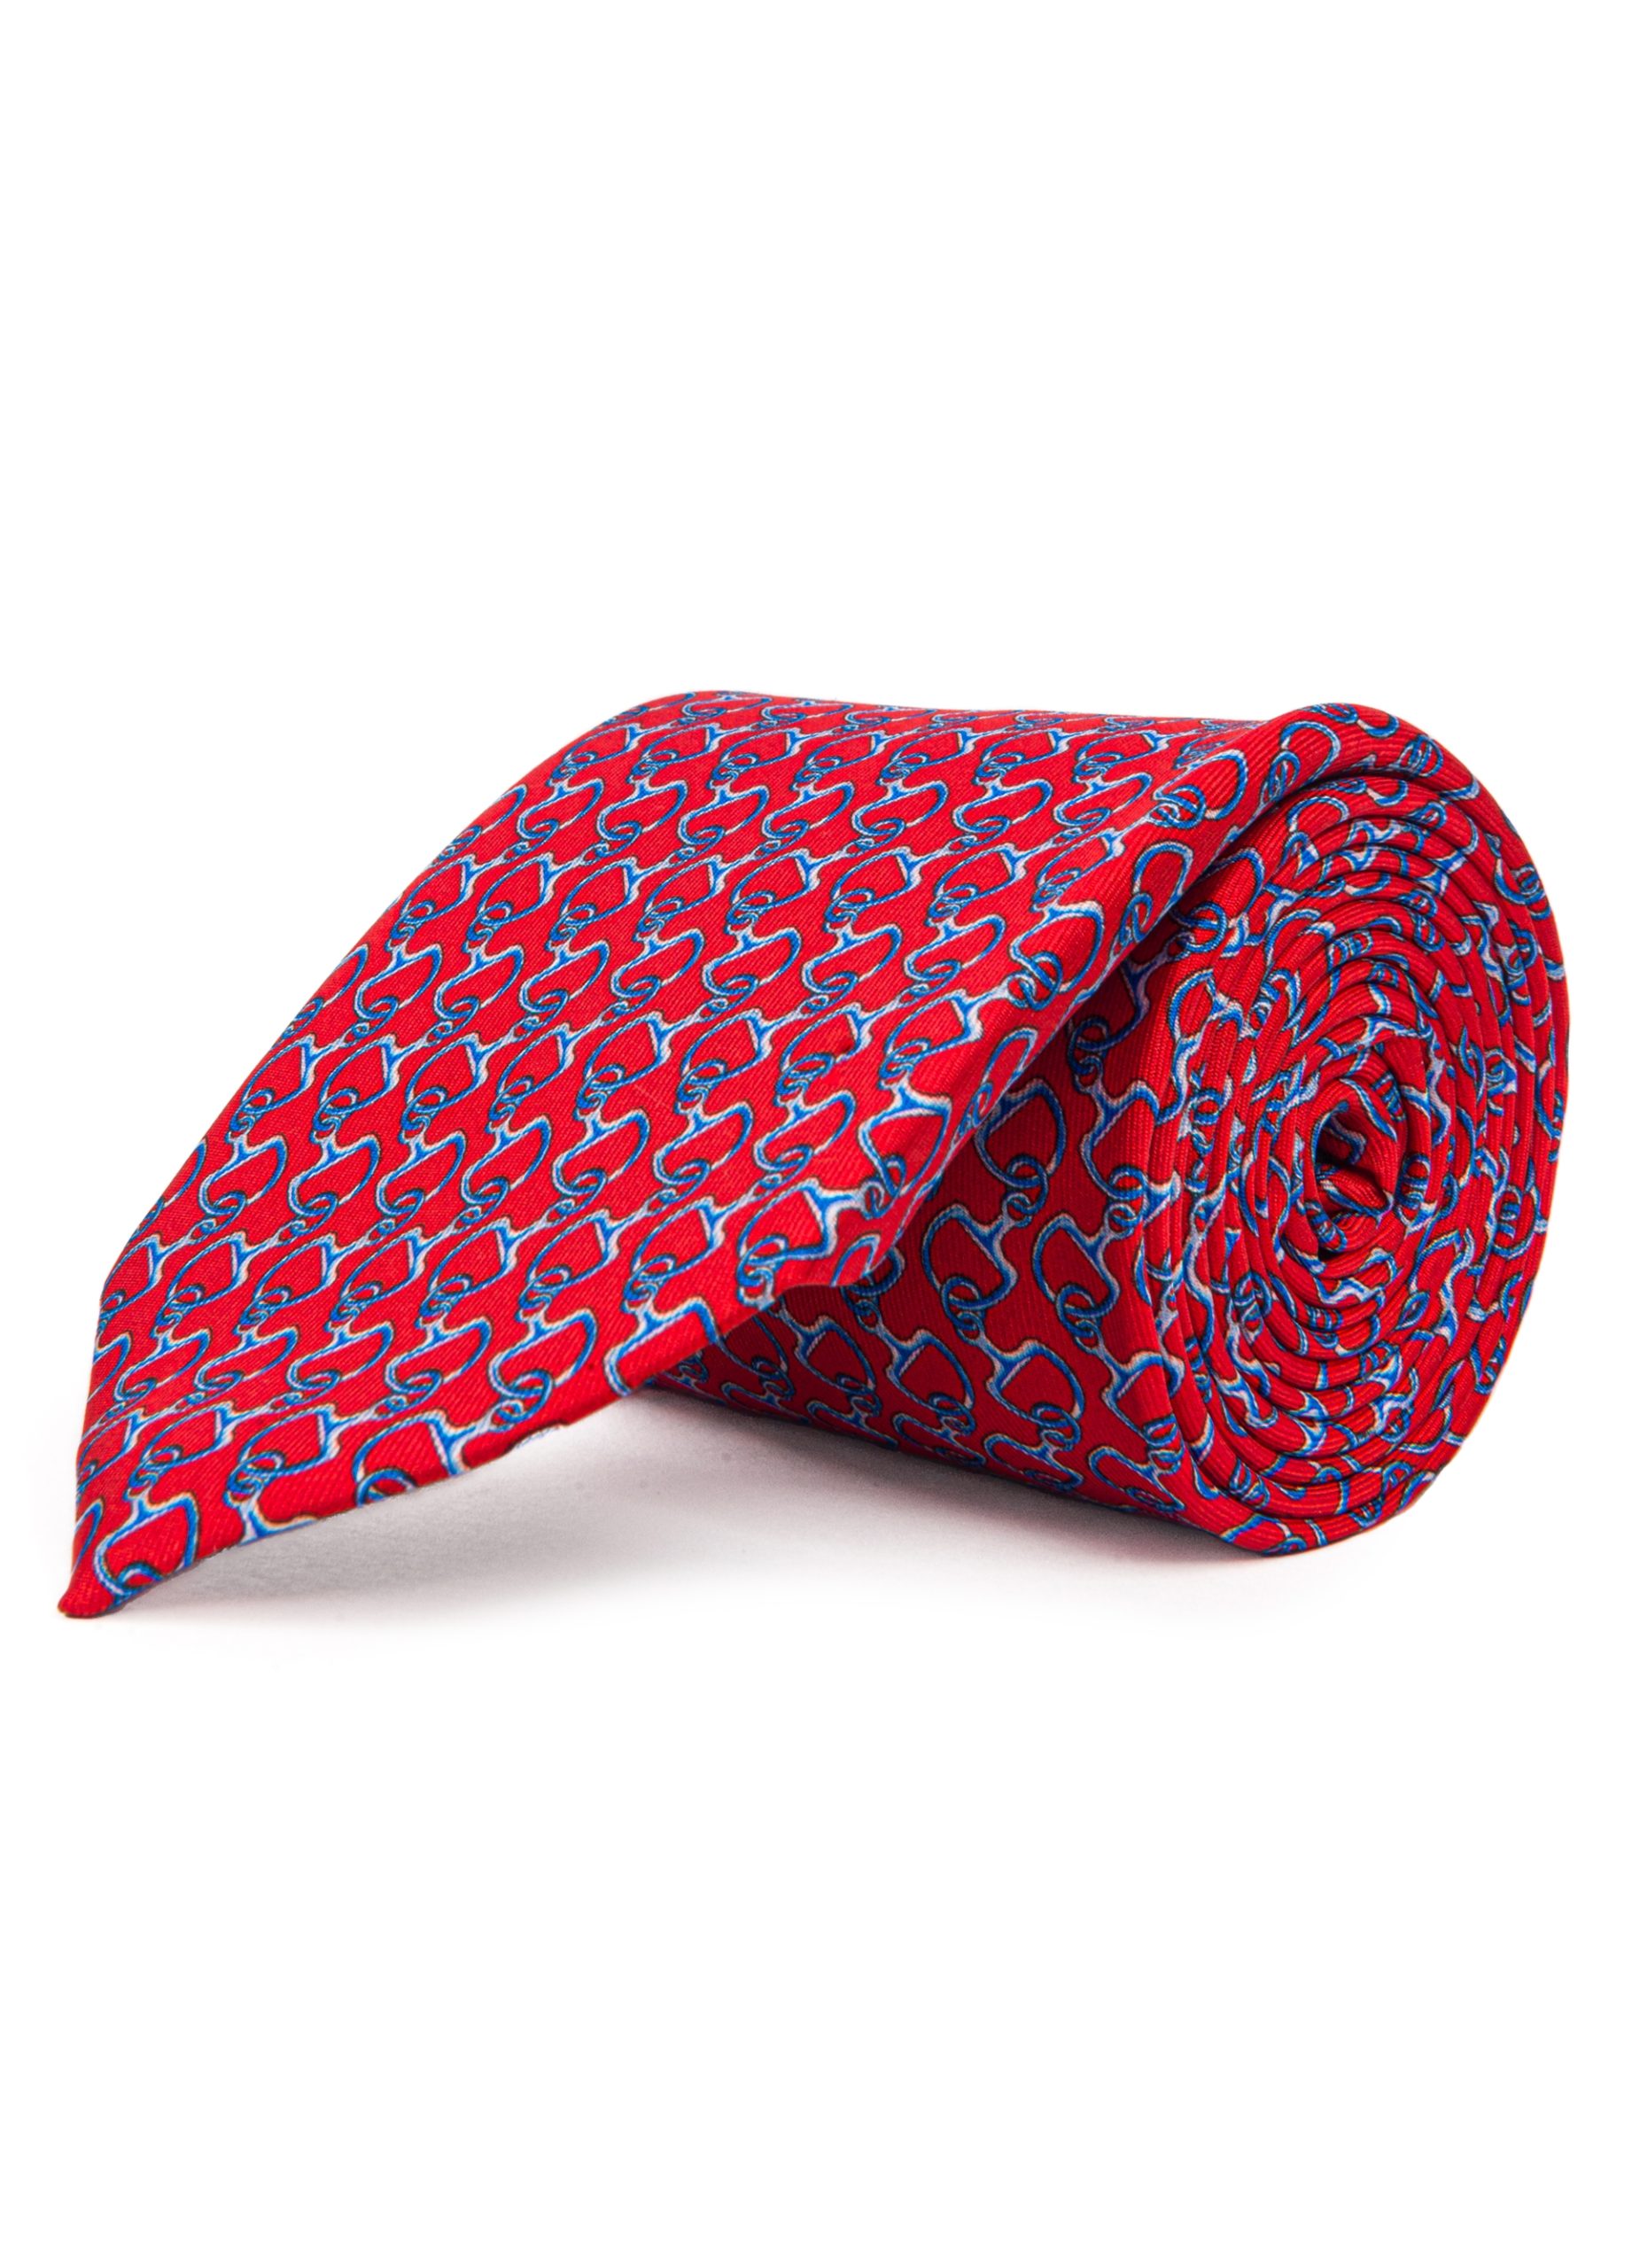 Men’s smart red and blue silk tie